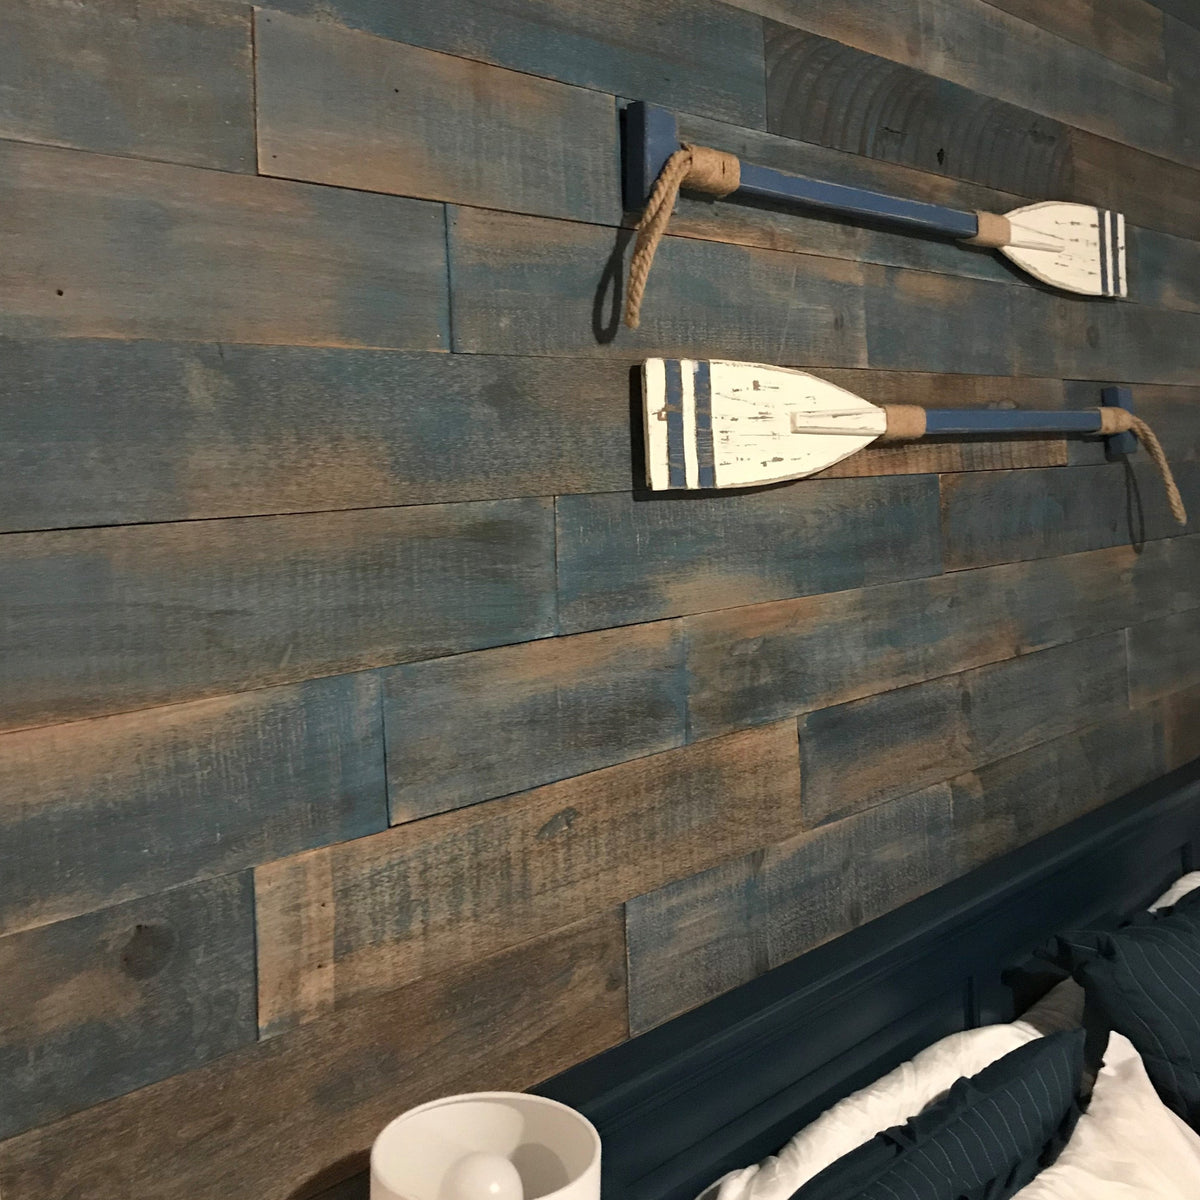 Distressed Wood Wall Planks - Blue-Ish